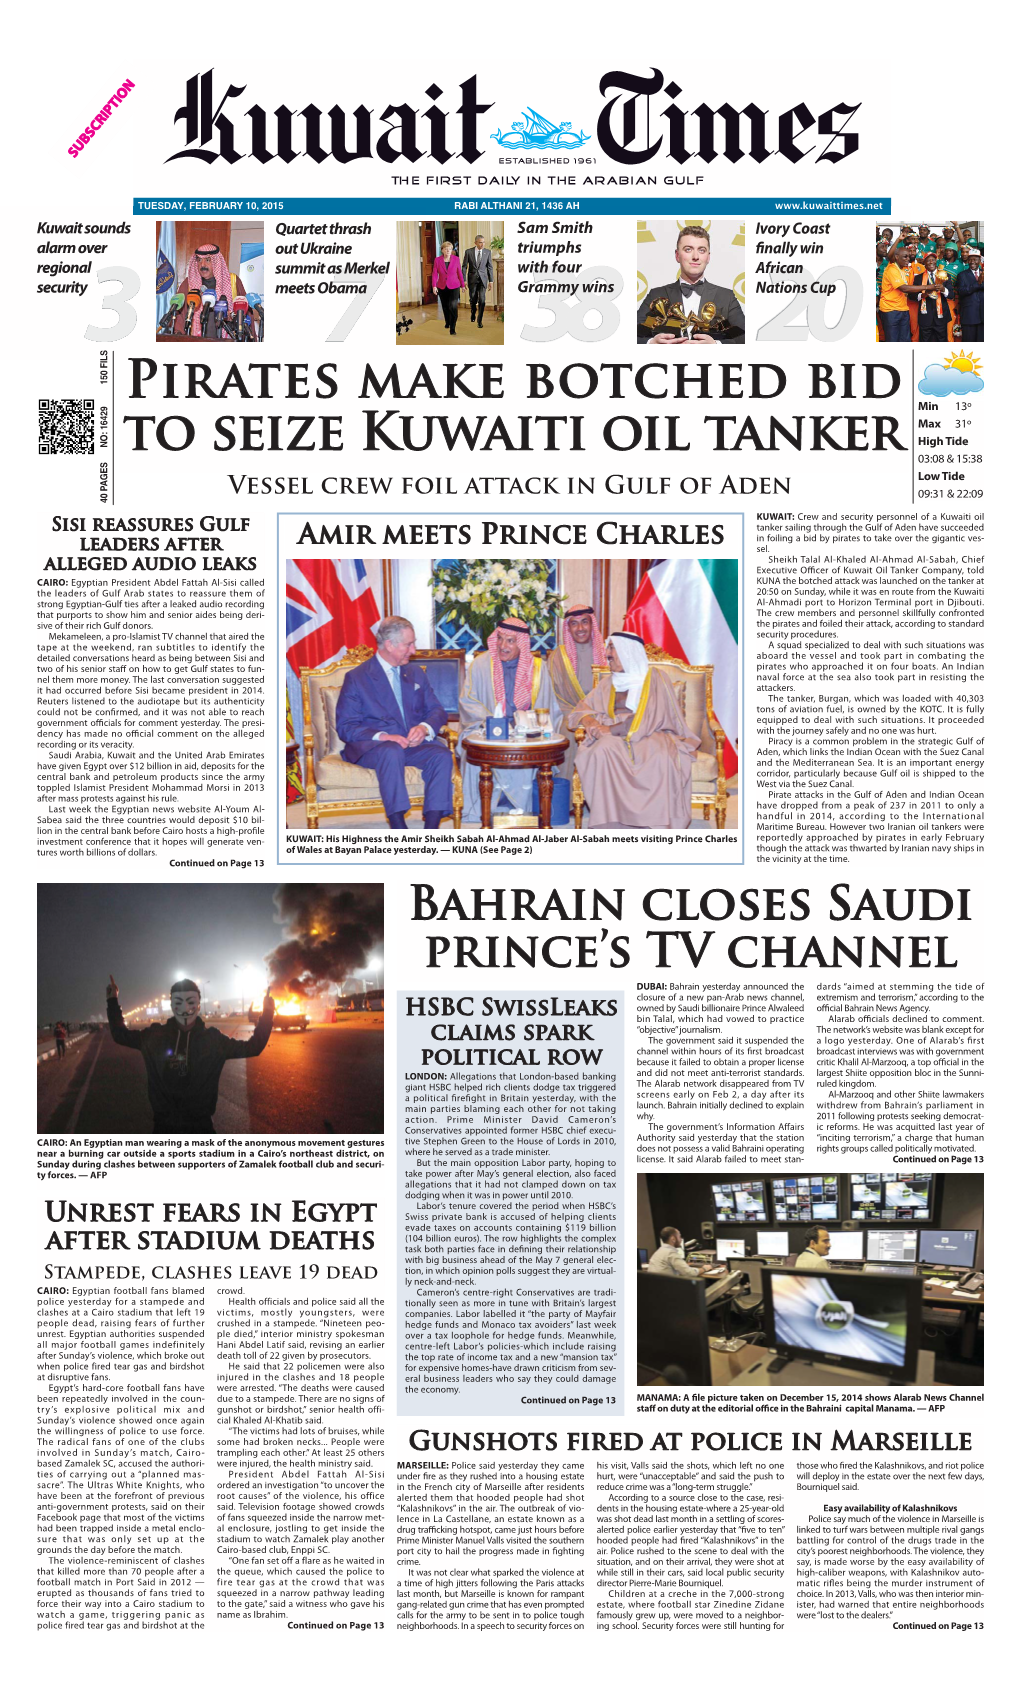 Pirates Make Botched Bid to Seize Kuwaiti Oil Tanker